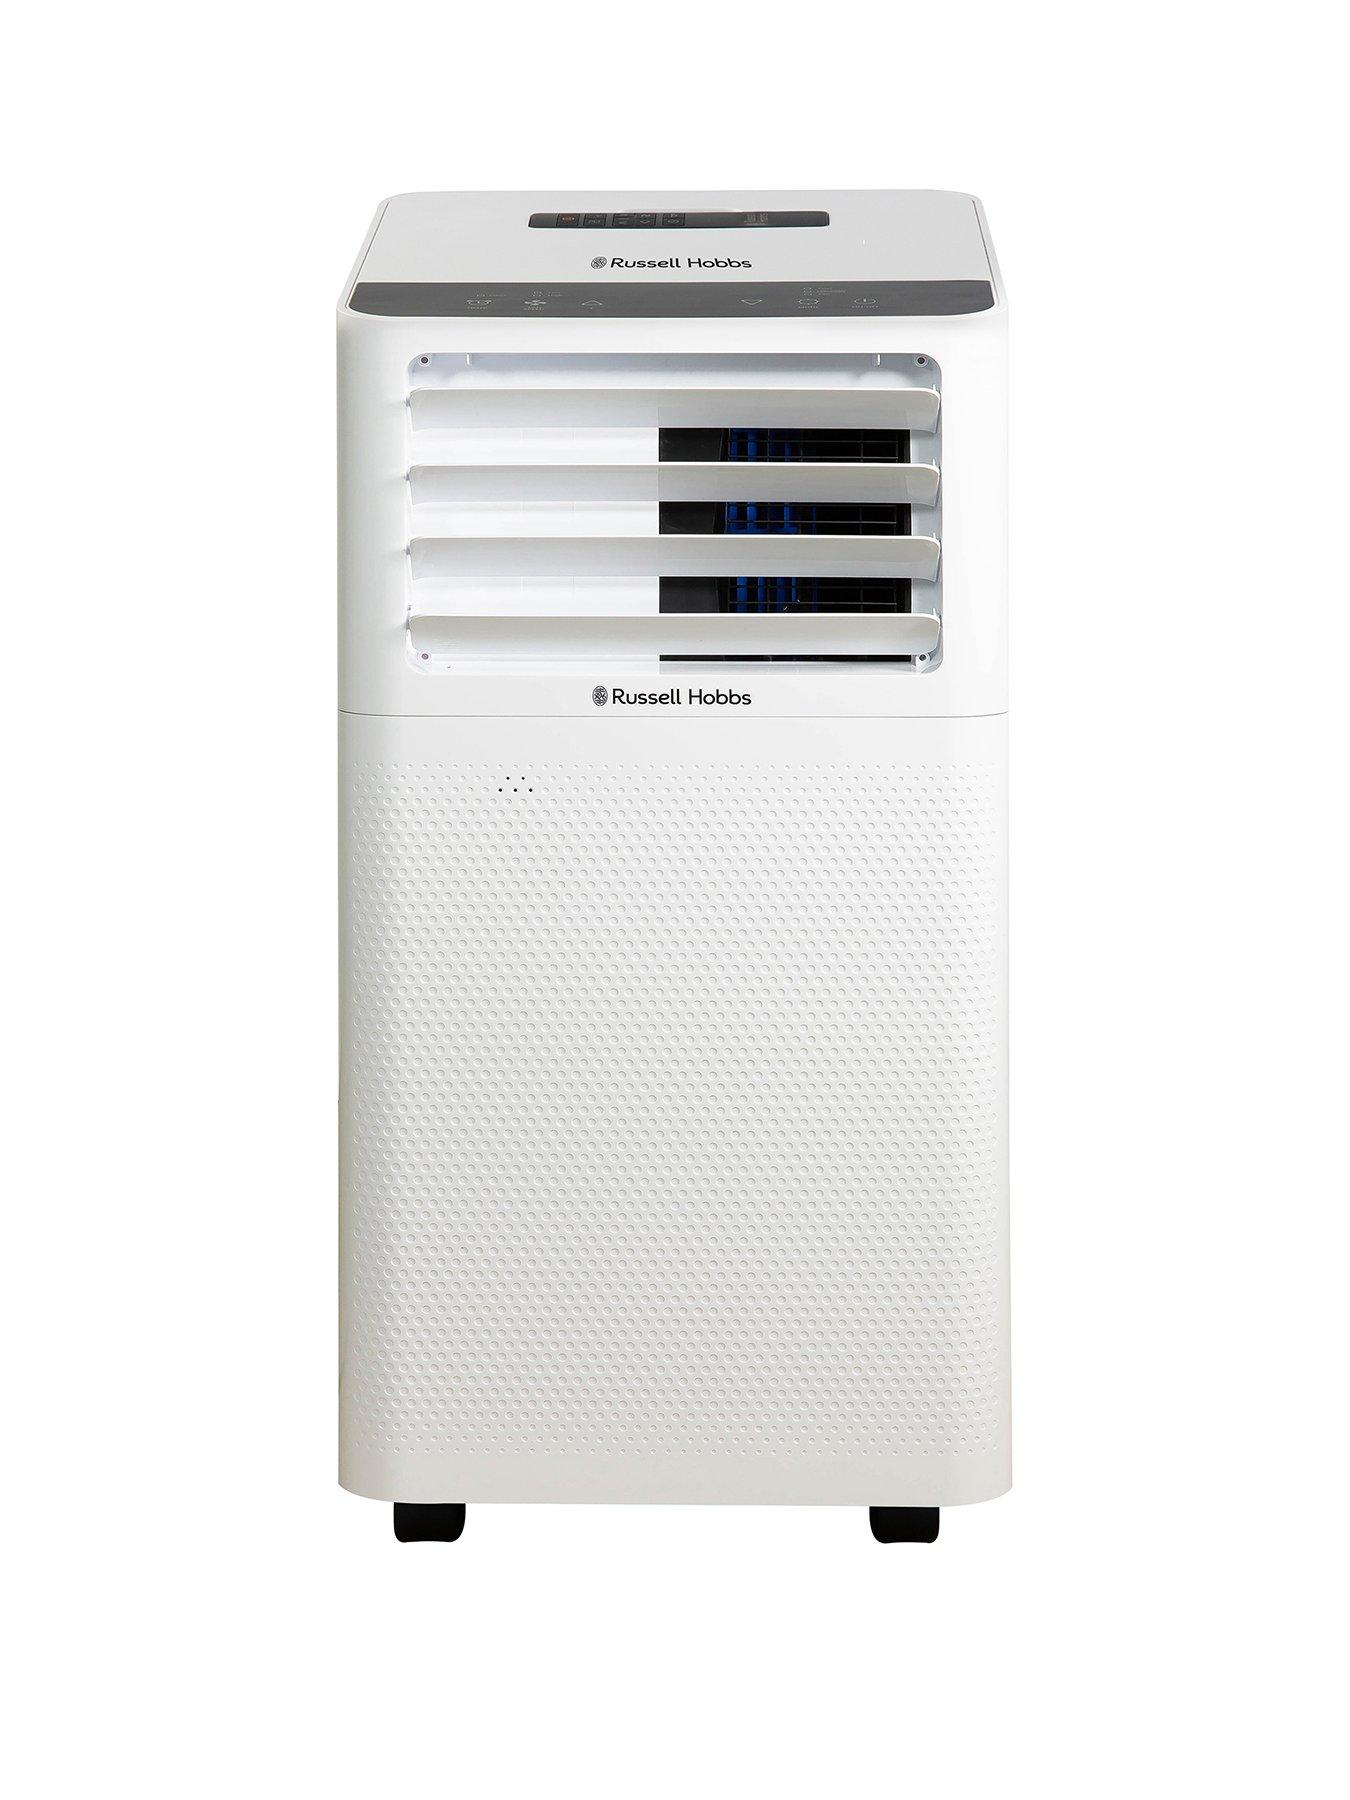 Russell Hobbs Rhpac3001 Portable Air Conditioner, Dehumidifier & Air Cooler In White